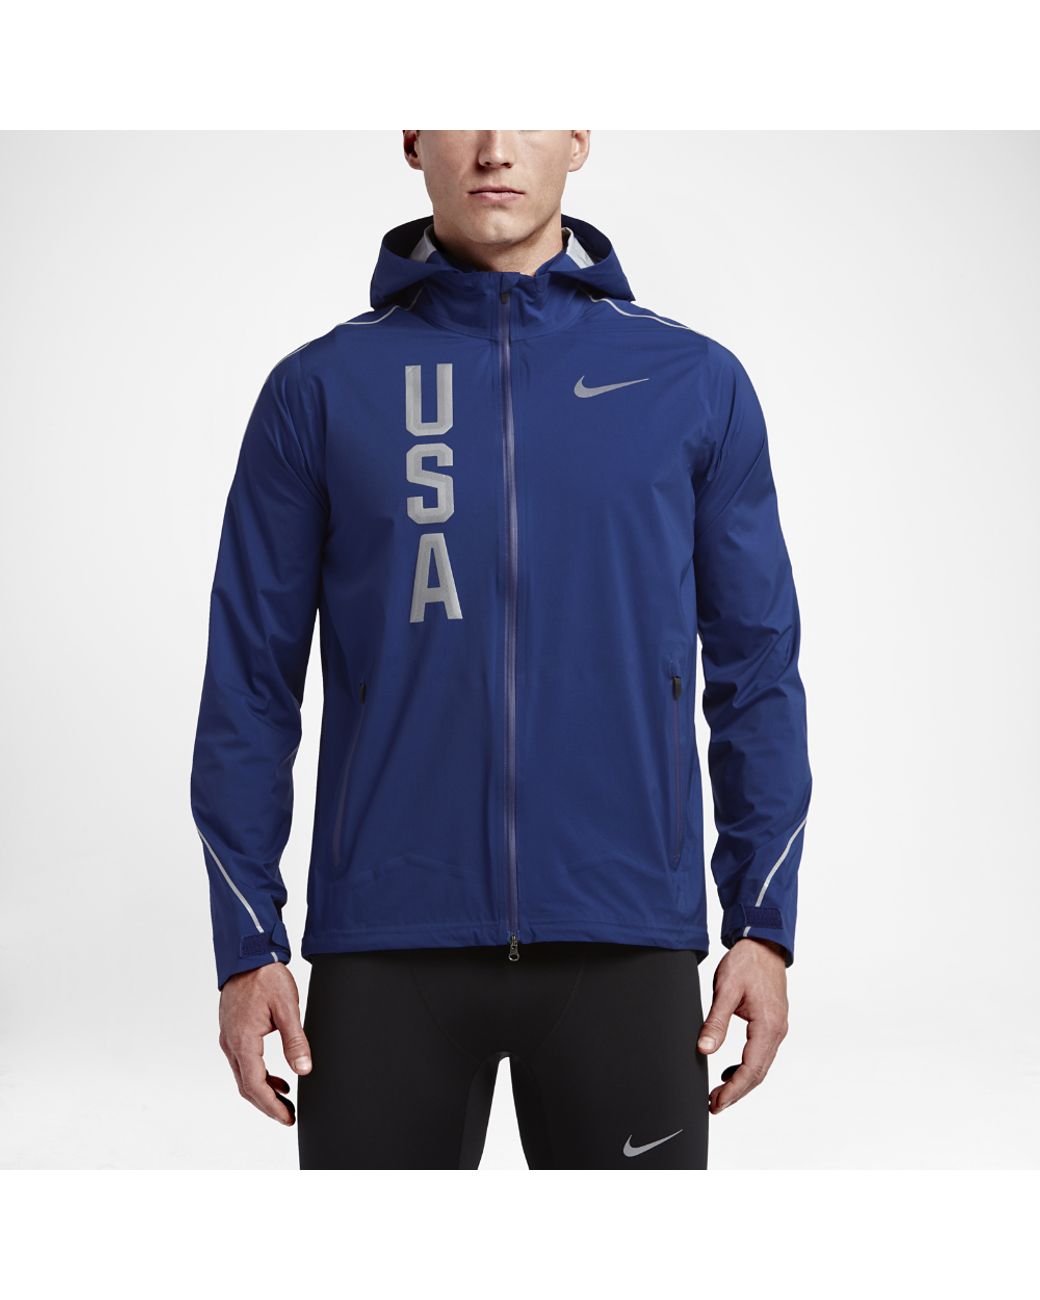 Nike Hypershield Team Usa Men's Running Jacket in Blue for Men | Lyst